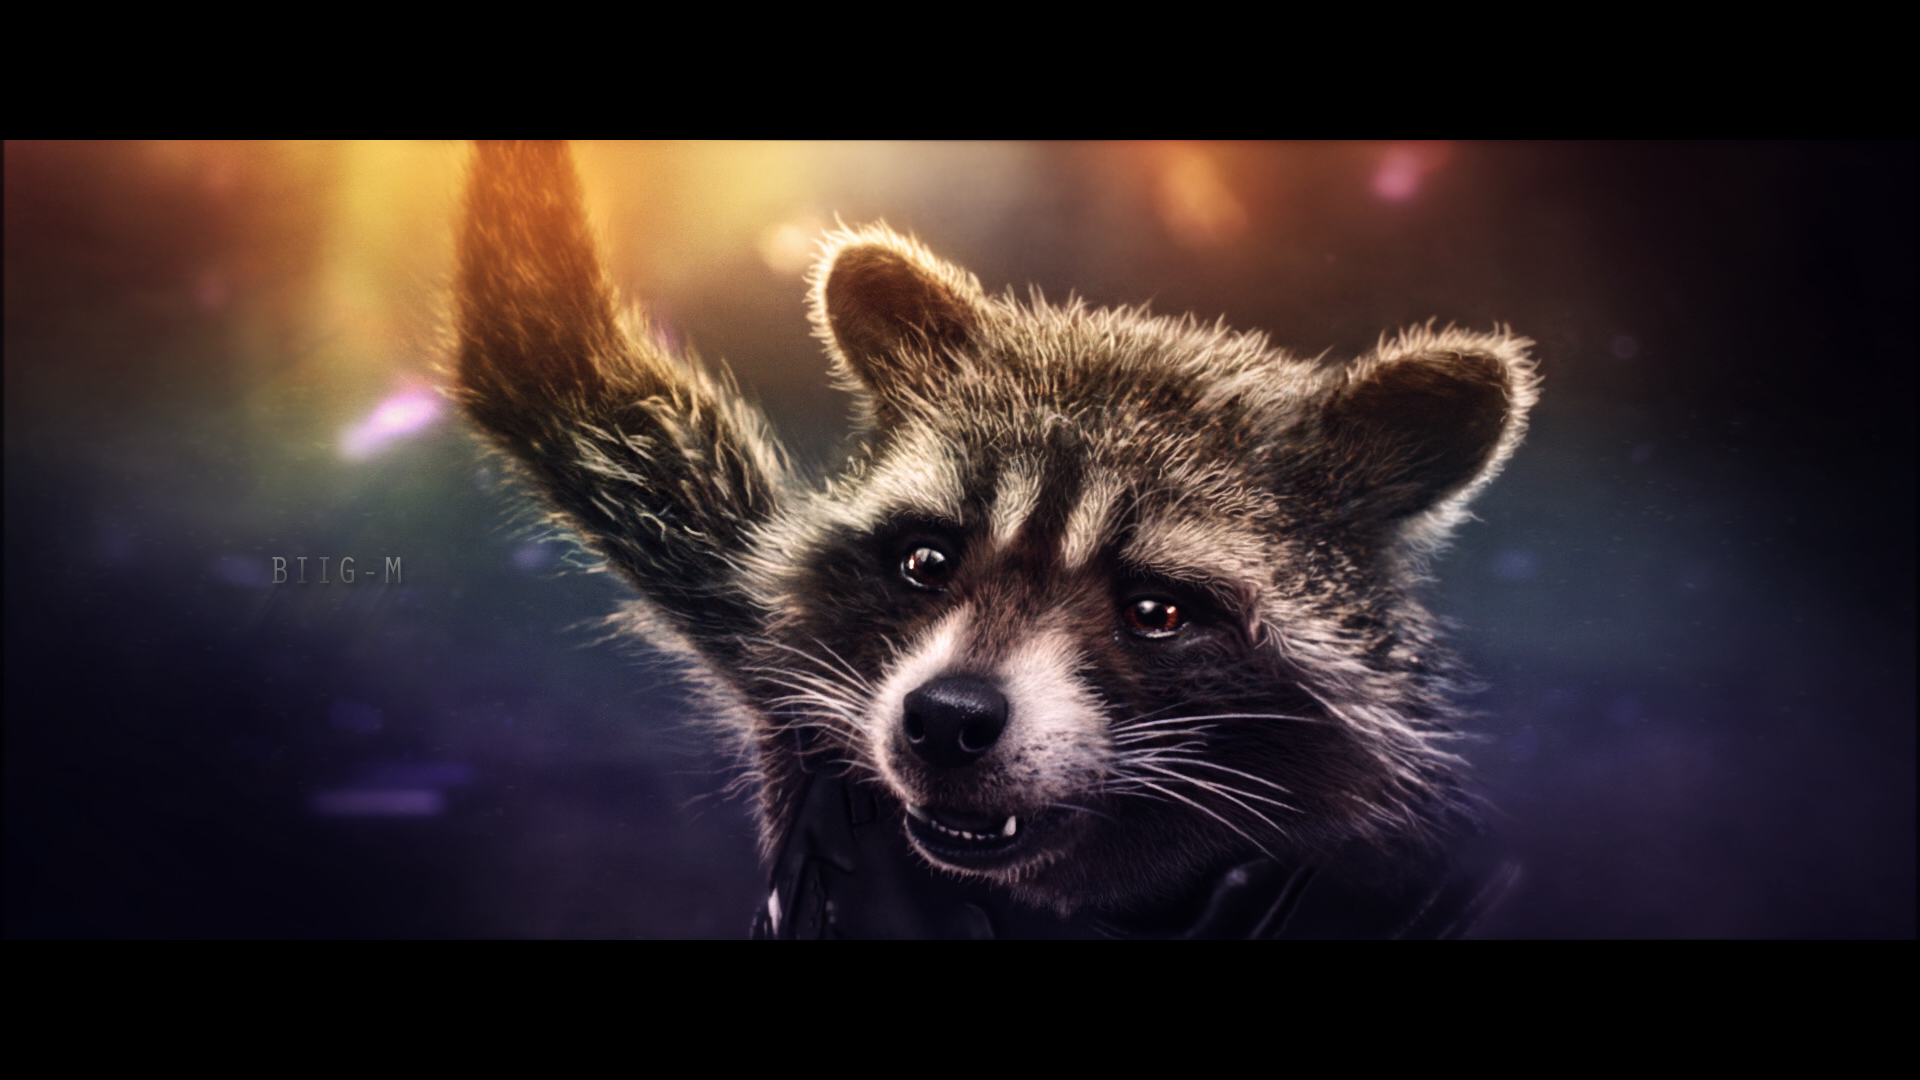 Rocket Raccoon Wallpaper By Biigm